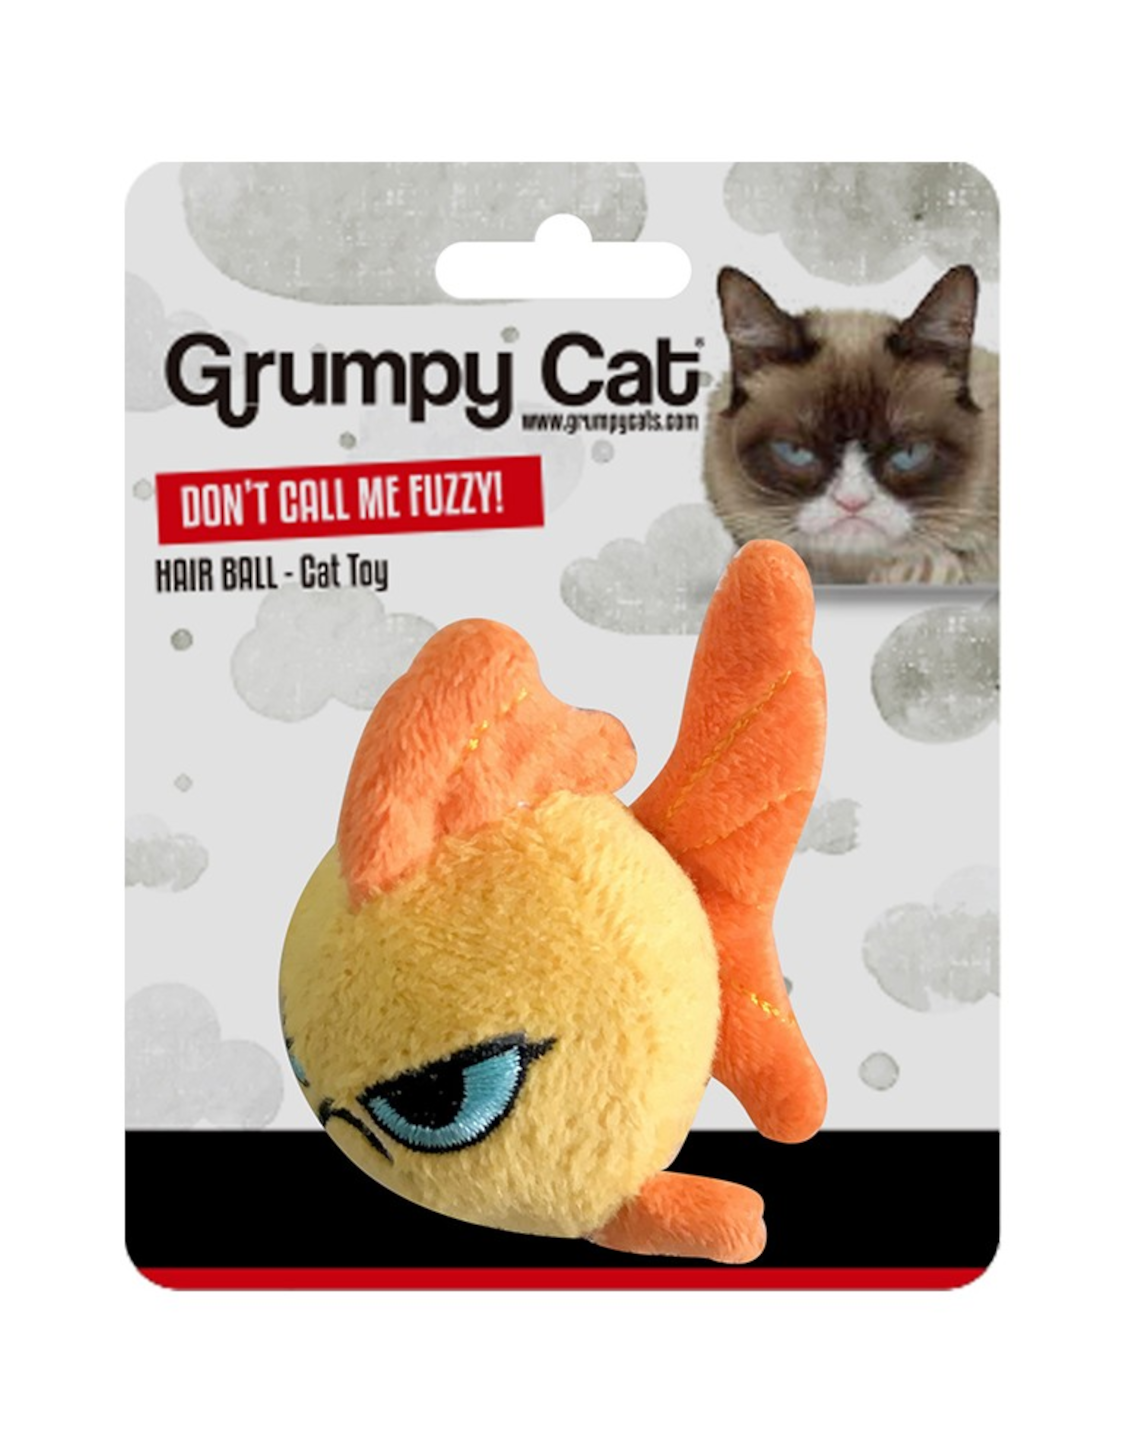 Grumpy Cat Goldfish Ball